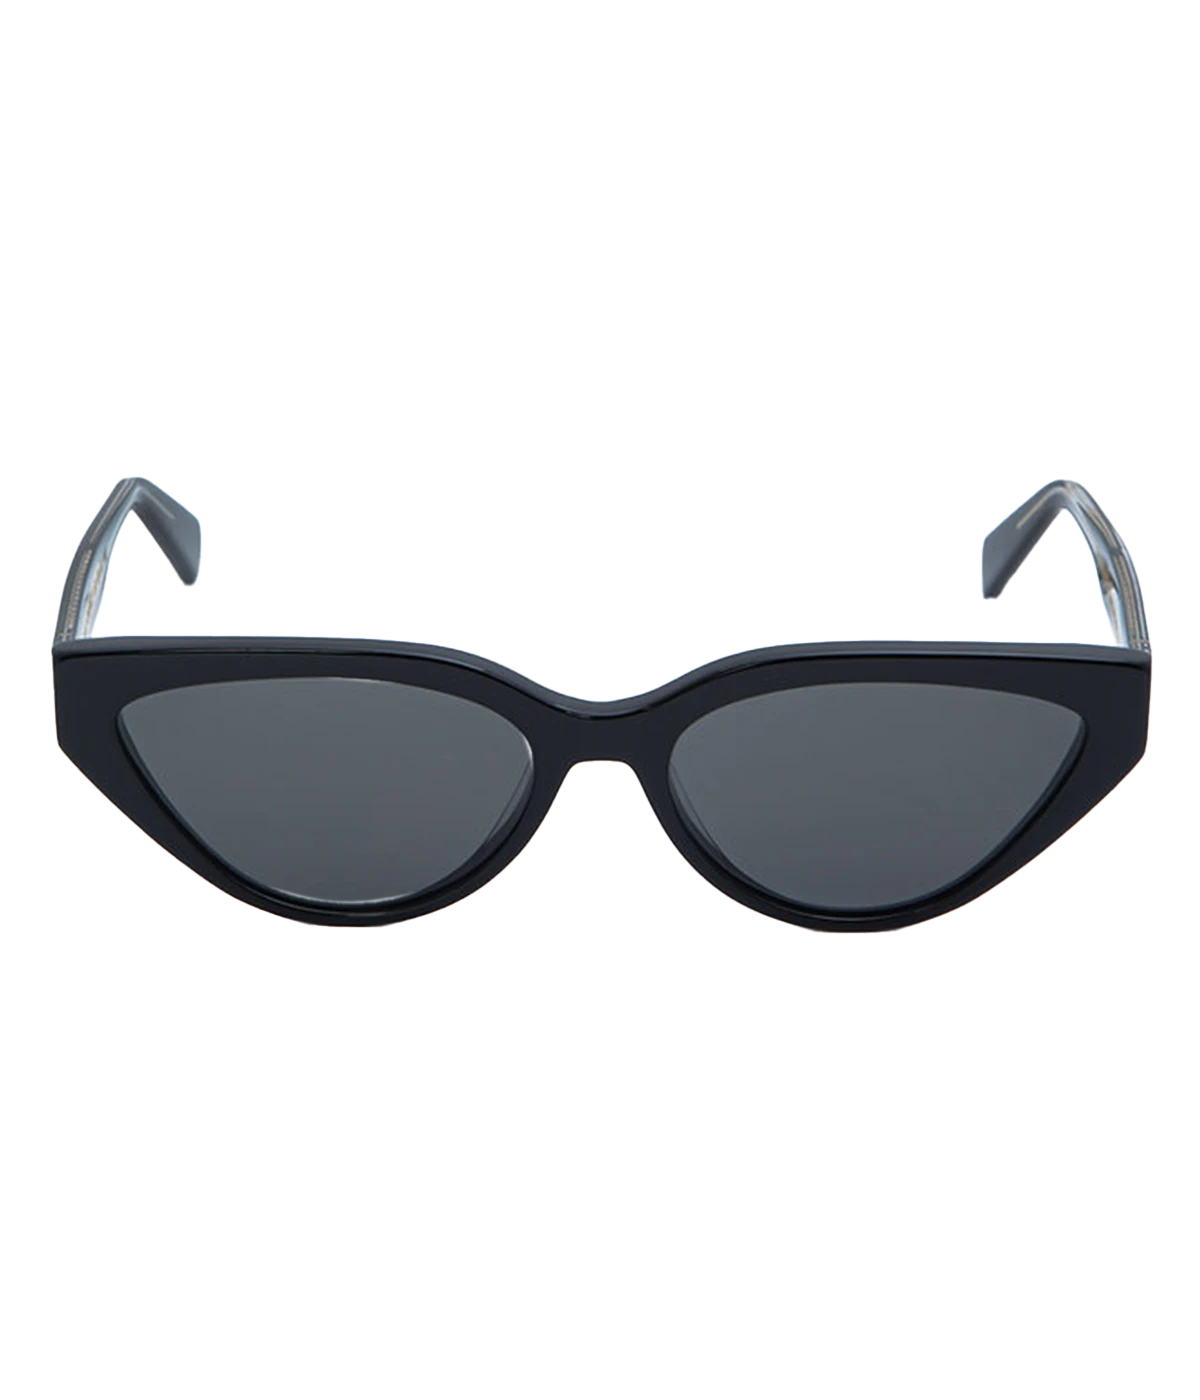 Saint Tropez Sunglasses in Black & Zero Flash